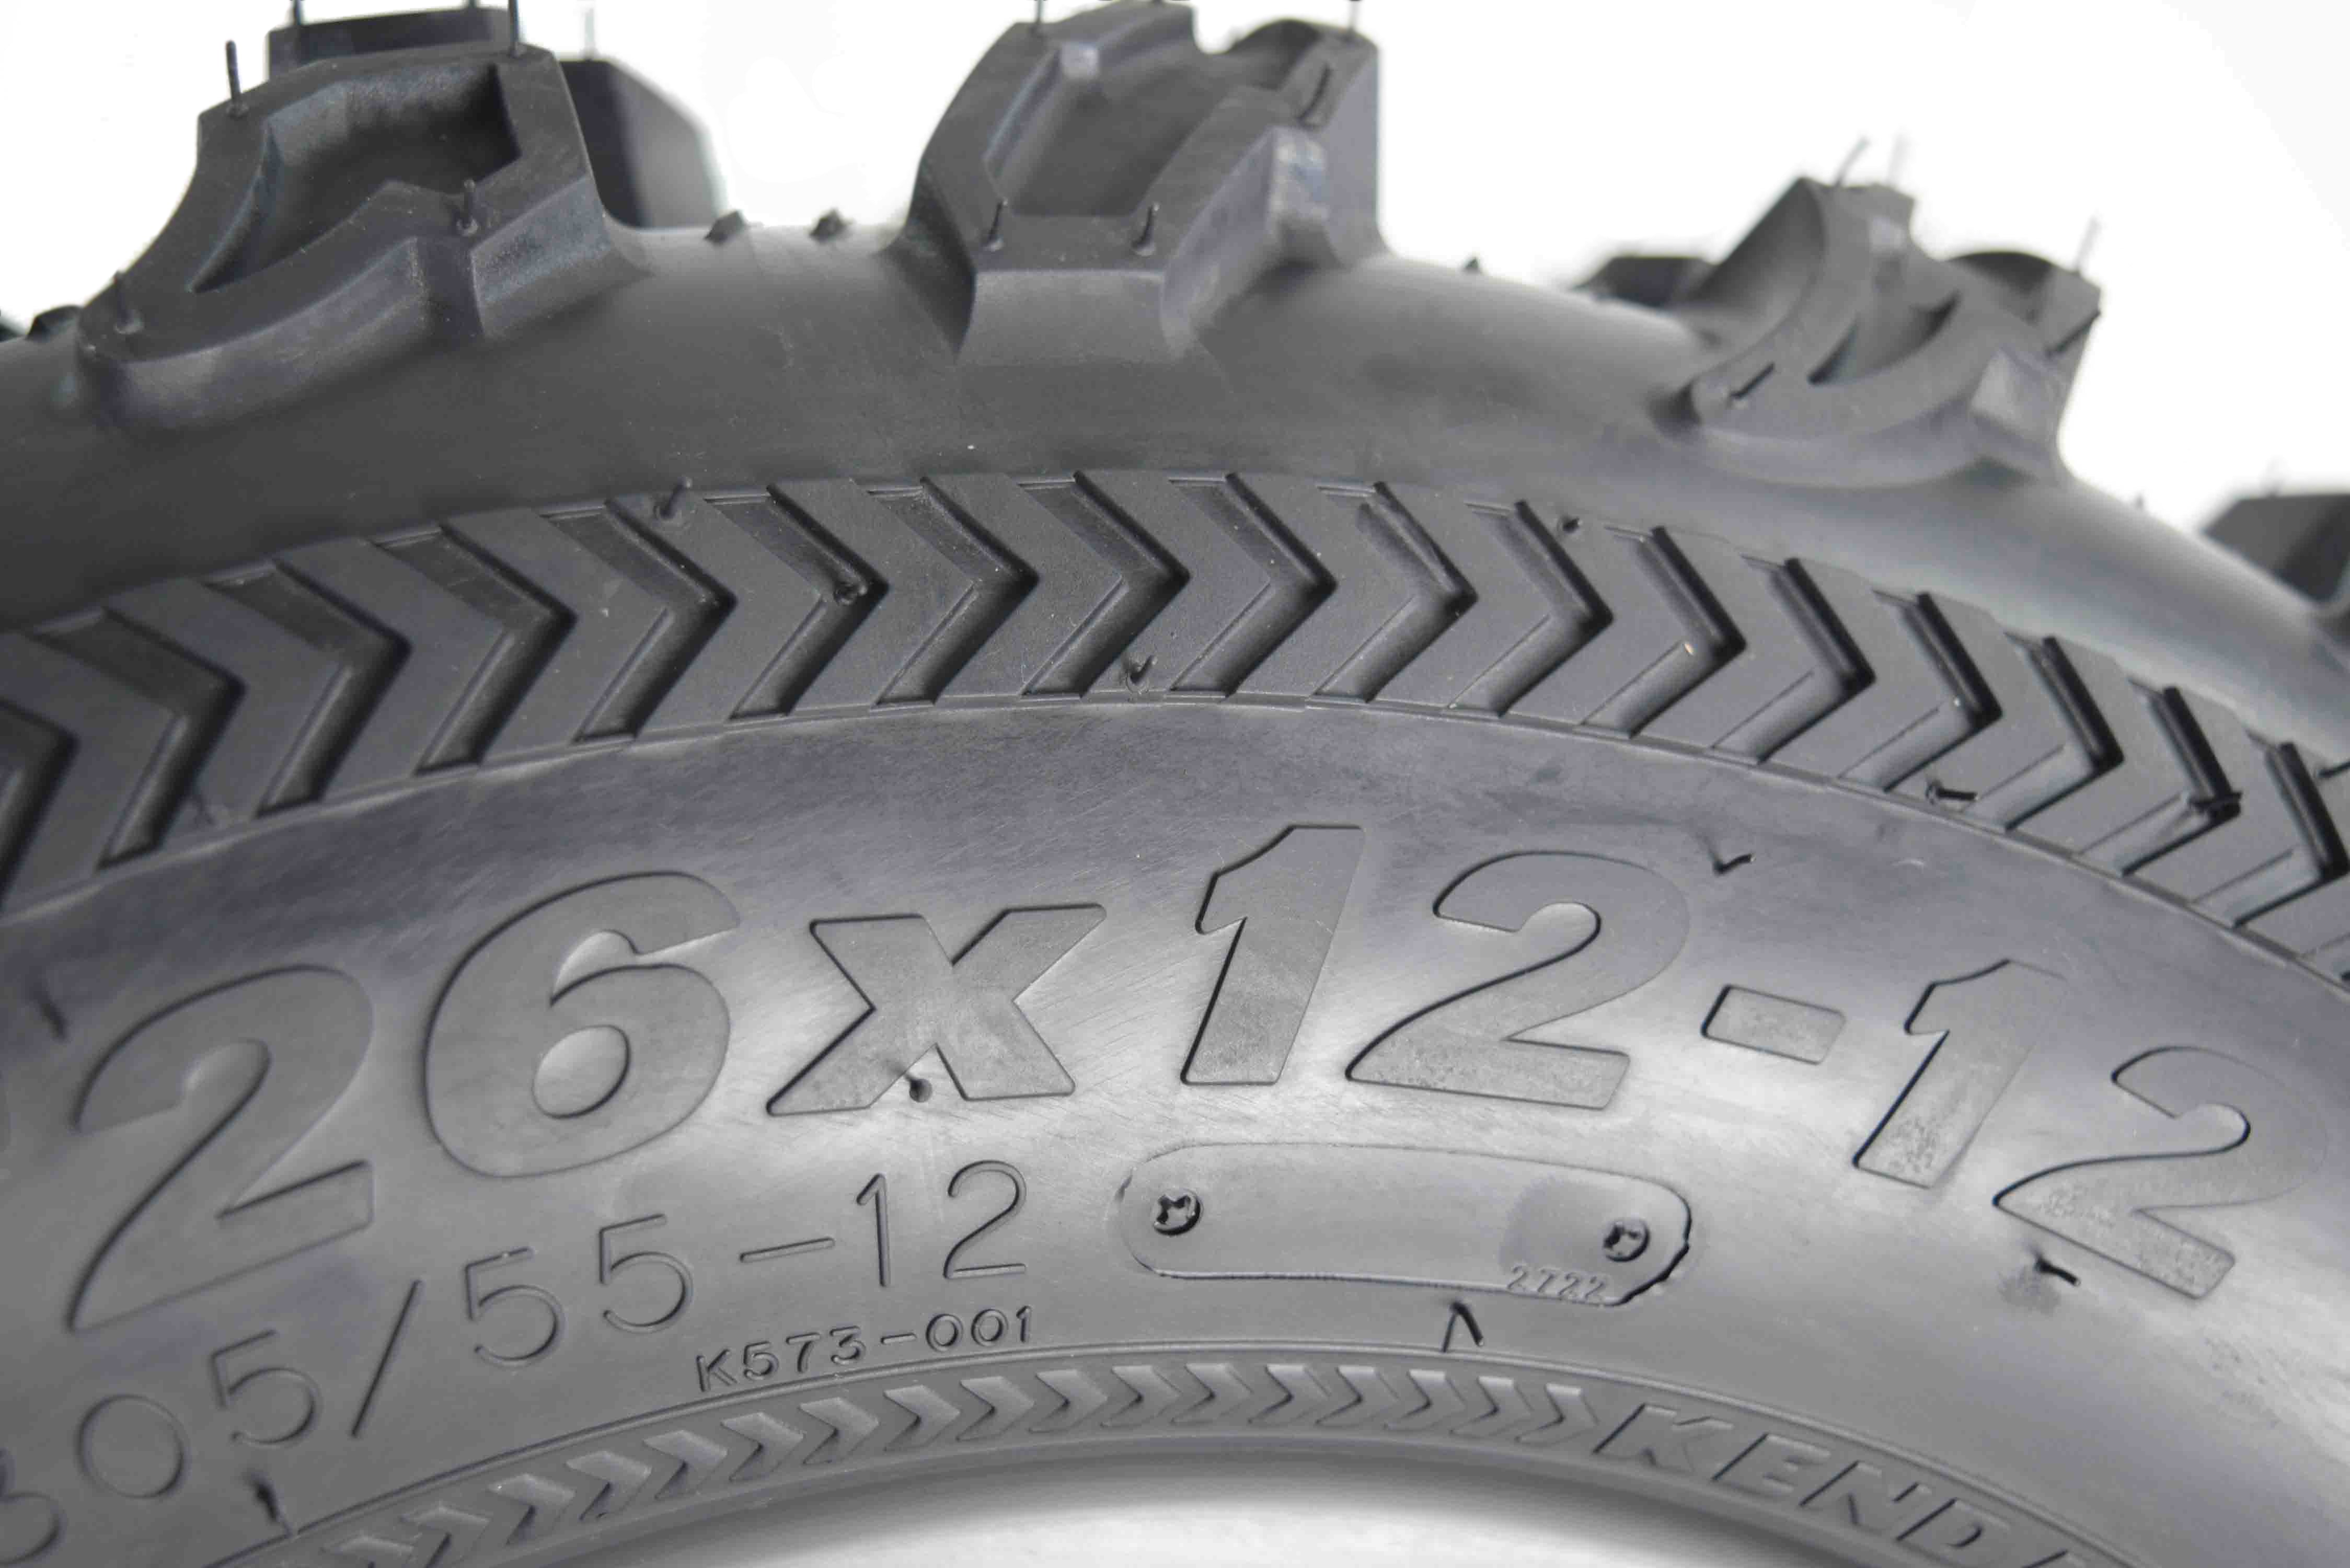 Kenda Bear Claw EX 26x12-12 Rear ATV 6 PLY Tires Bearclaw 26x12x12 (4 Pack)